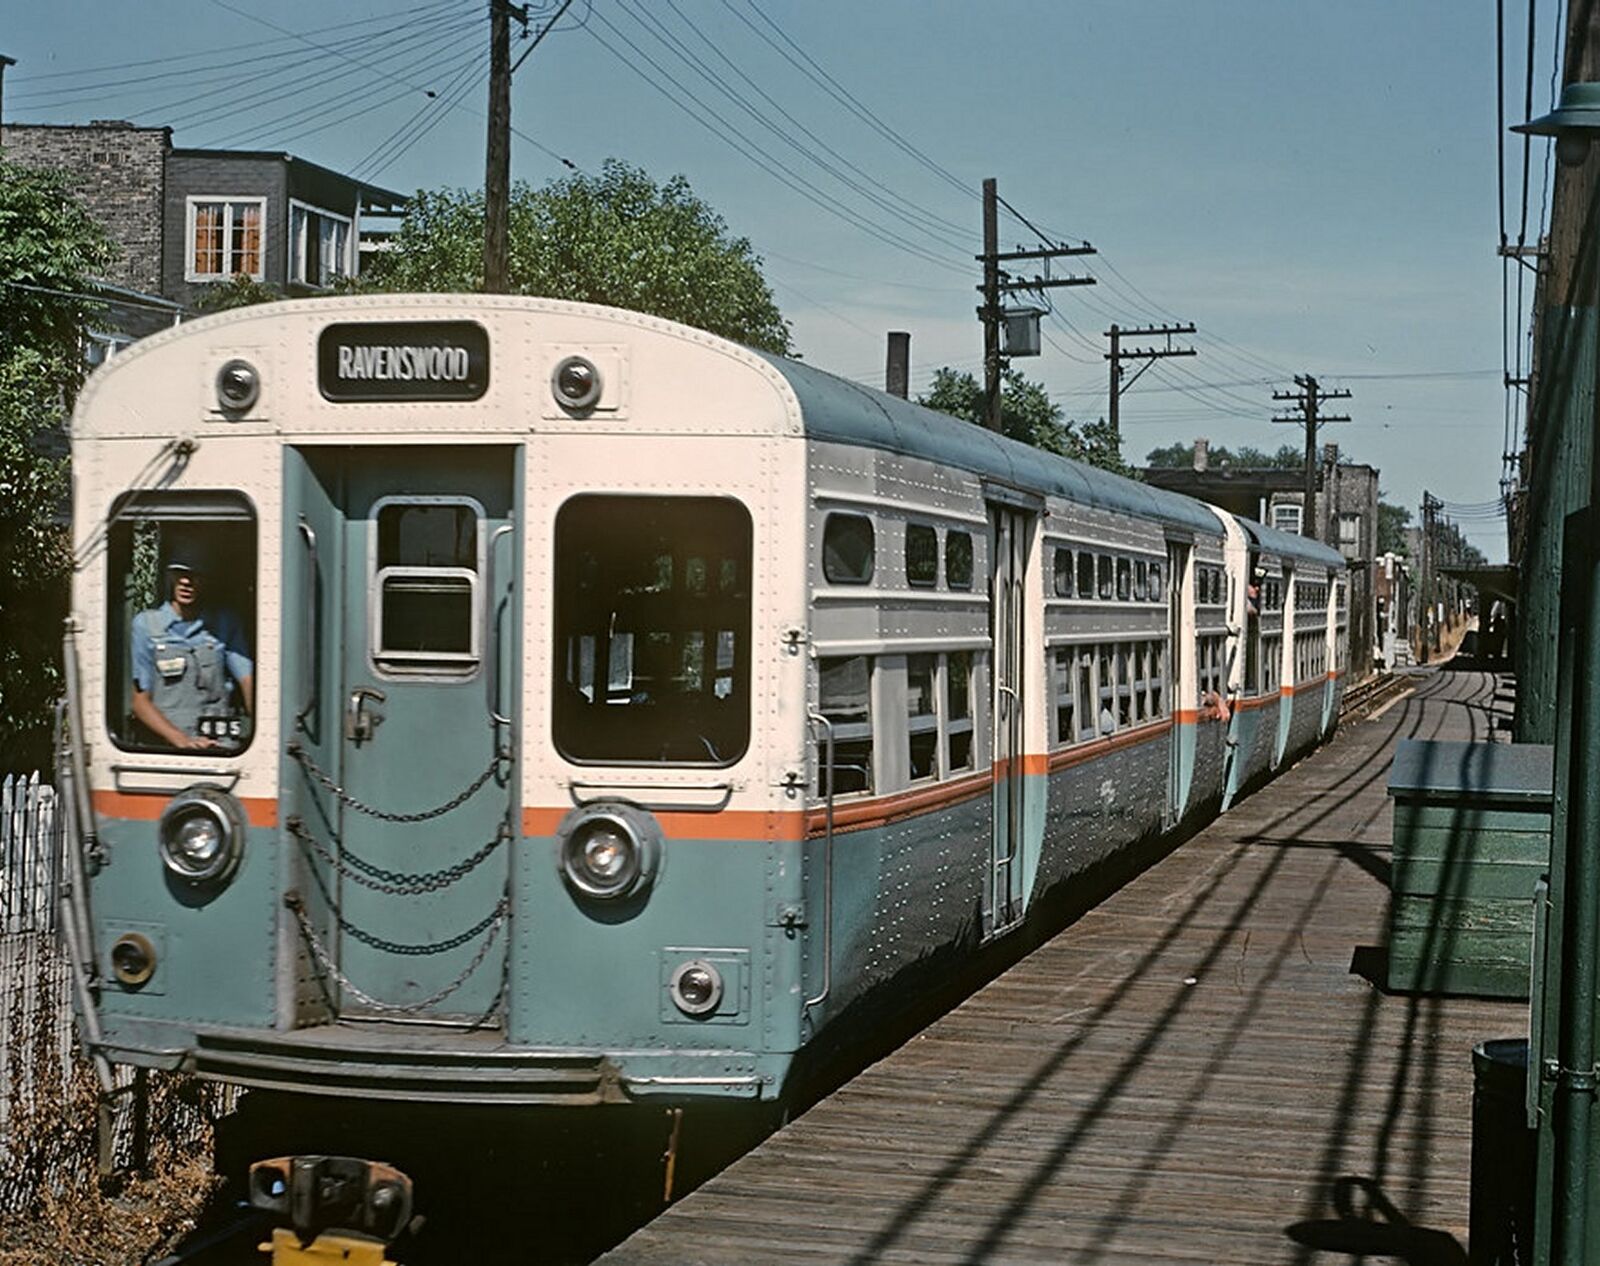 1965 CHICAGO TRANSIT Commuter Railroad PHOTO Ravenswood Station